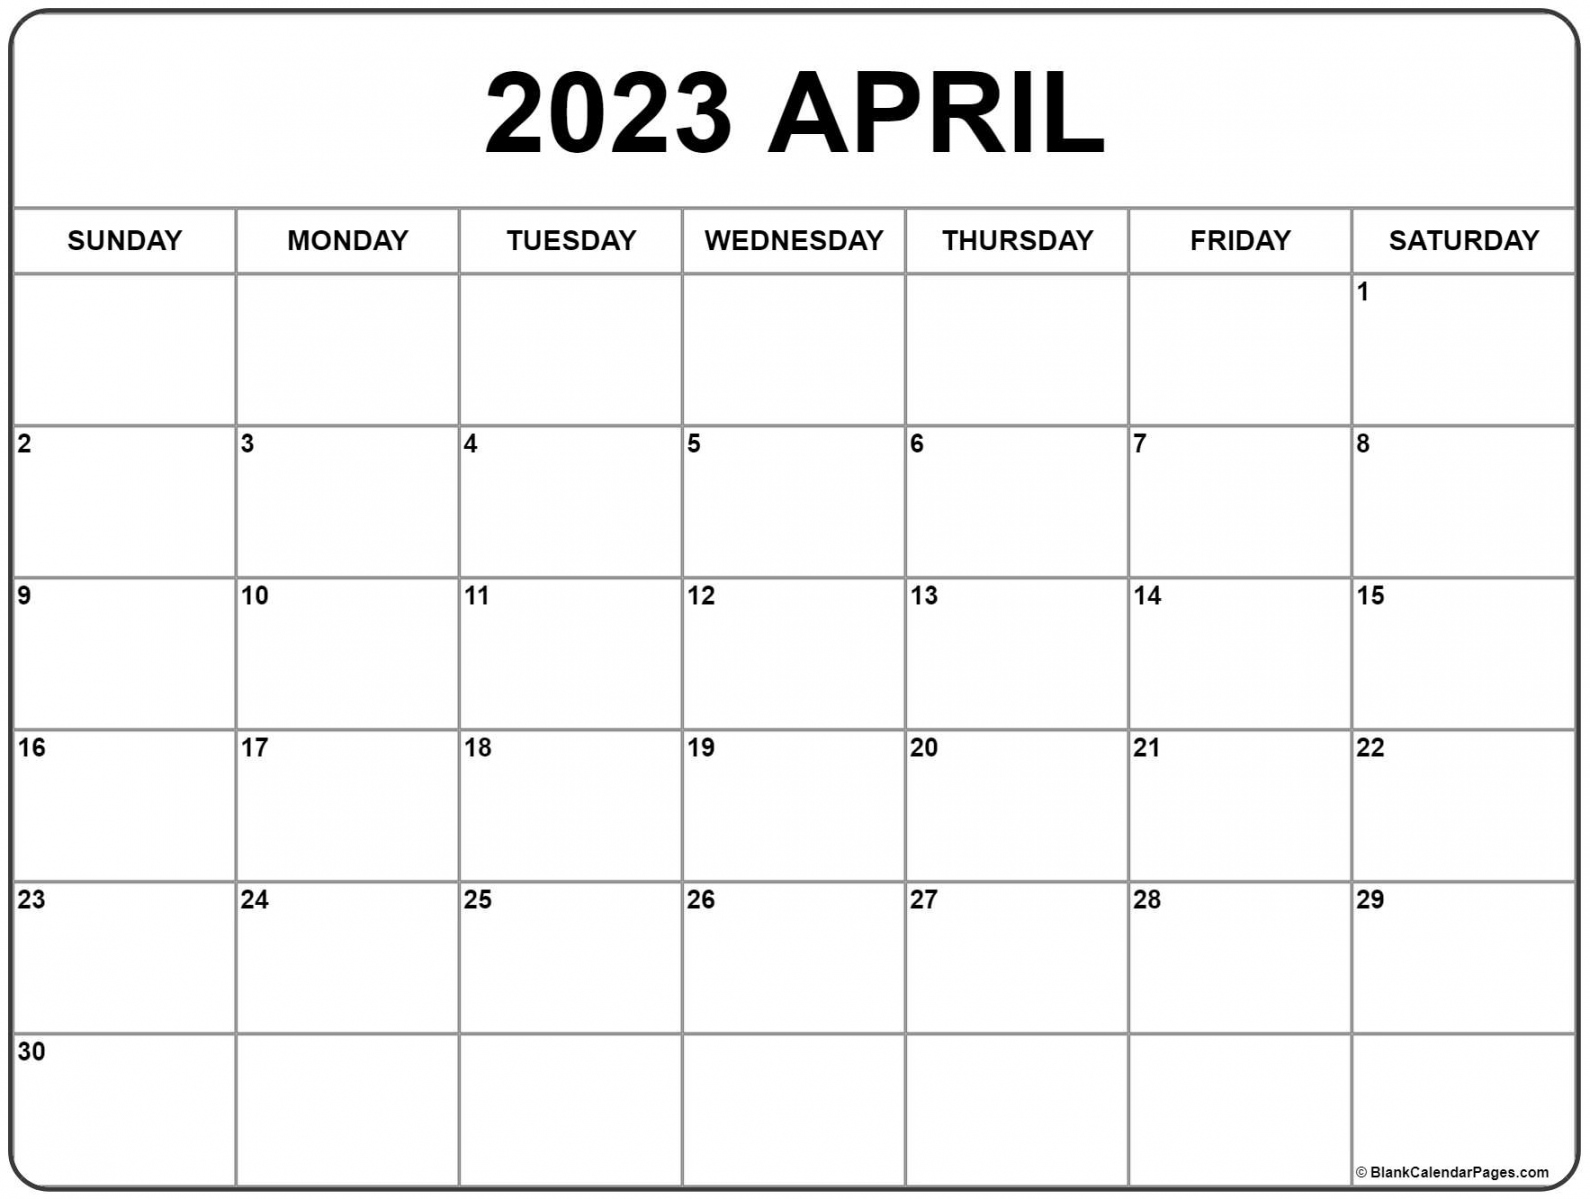 April 2023 Calendar Printable Free - Printable - April  calendar  free printable calendar